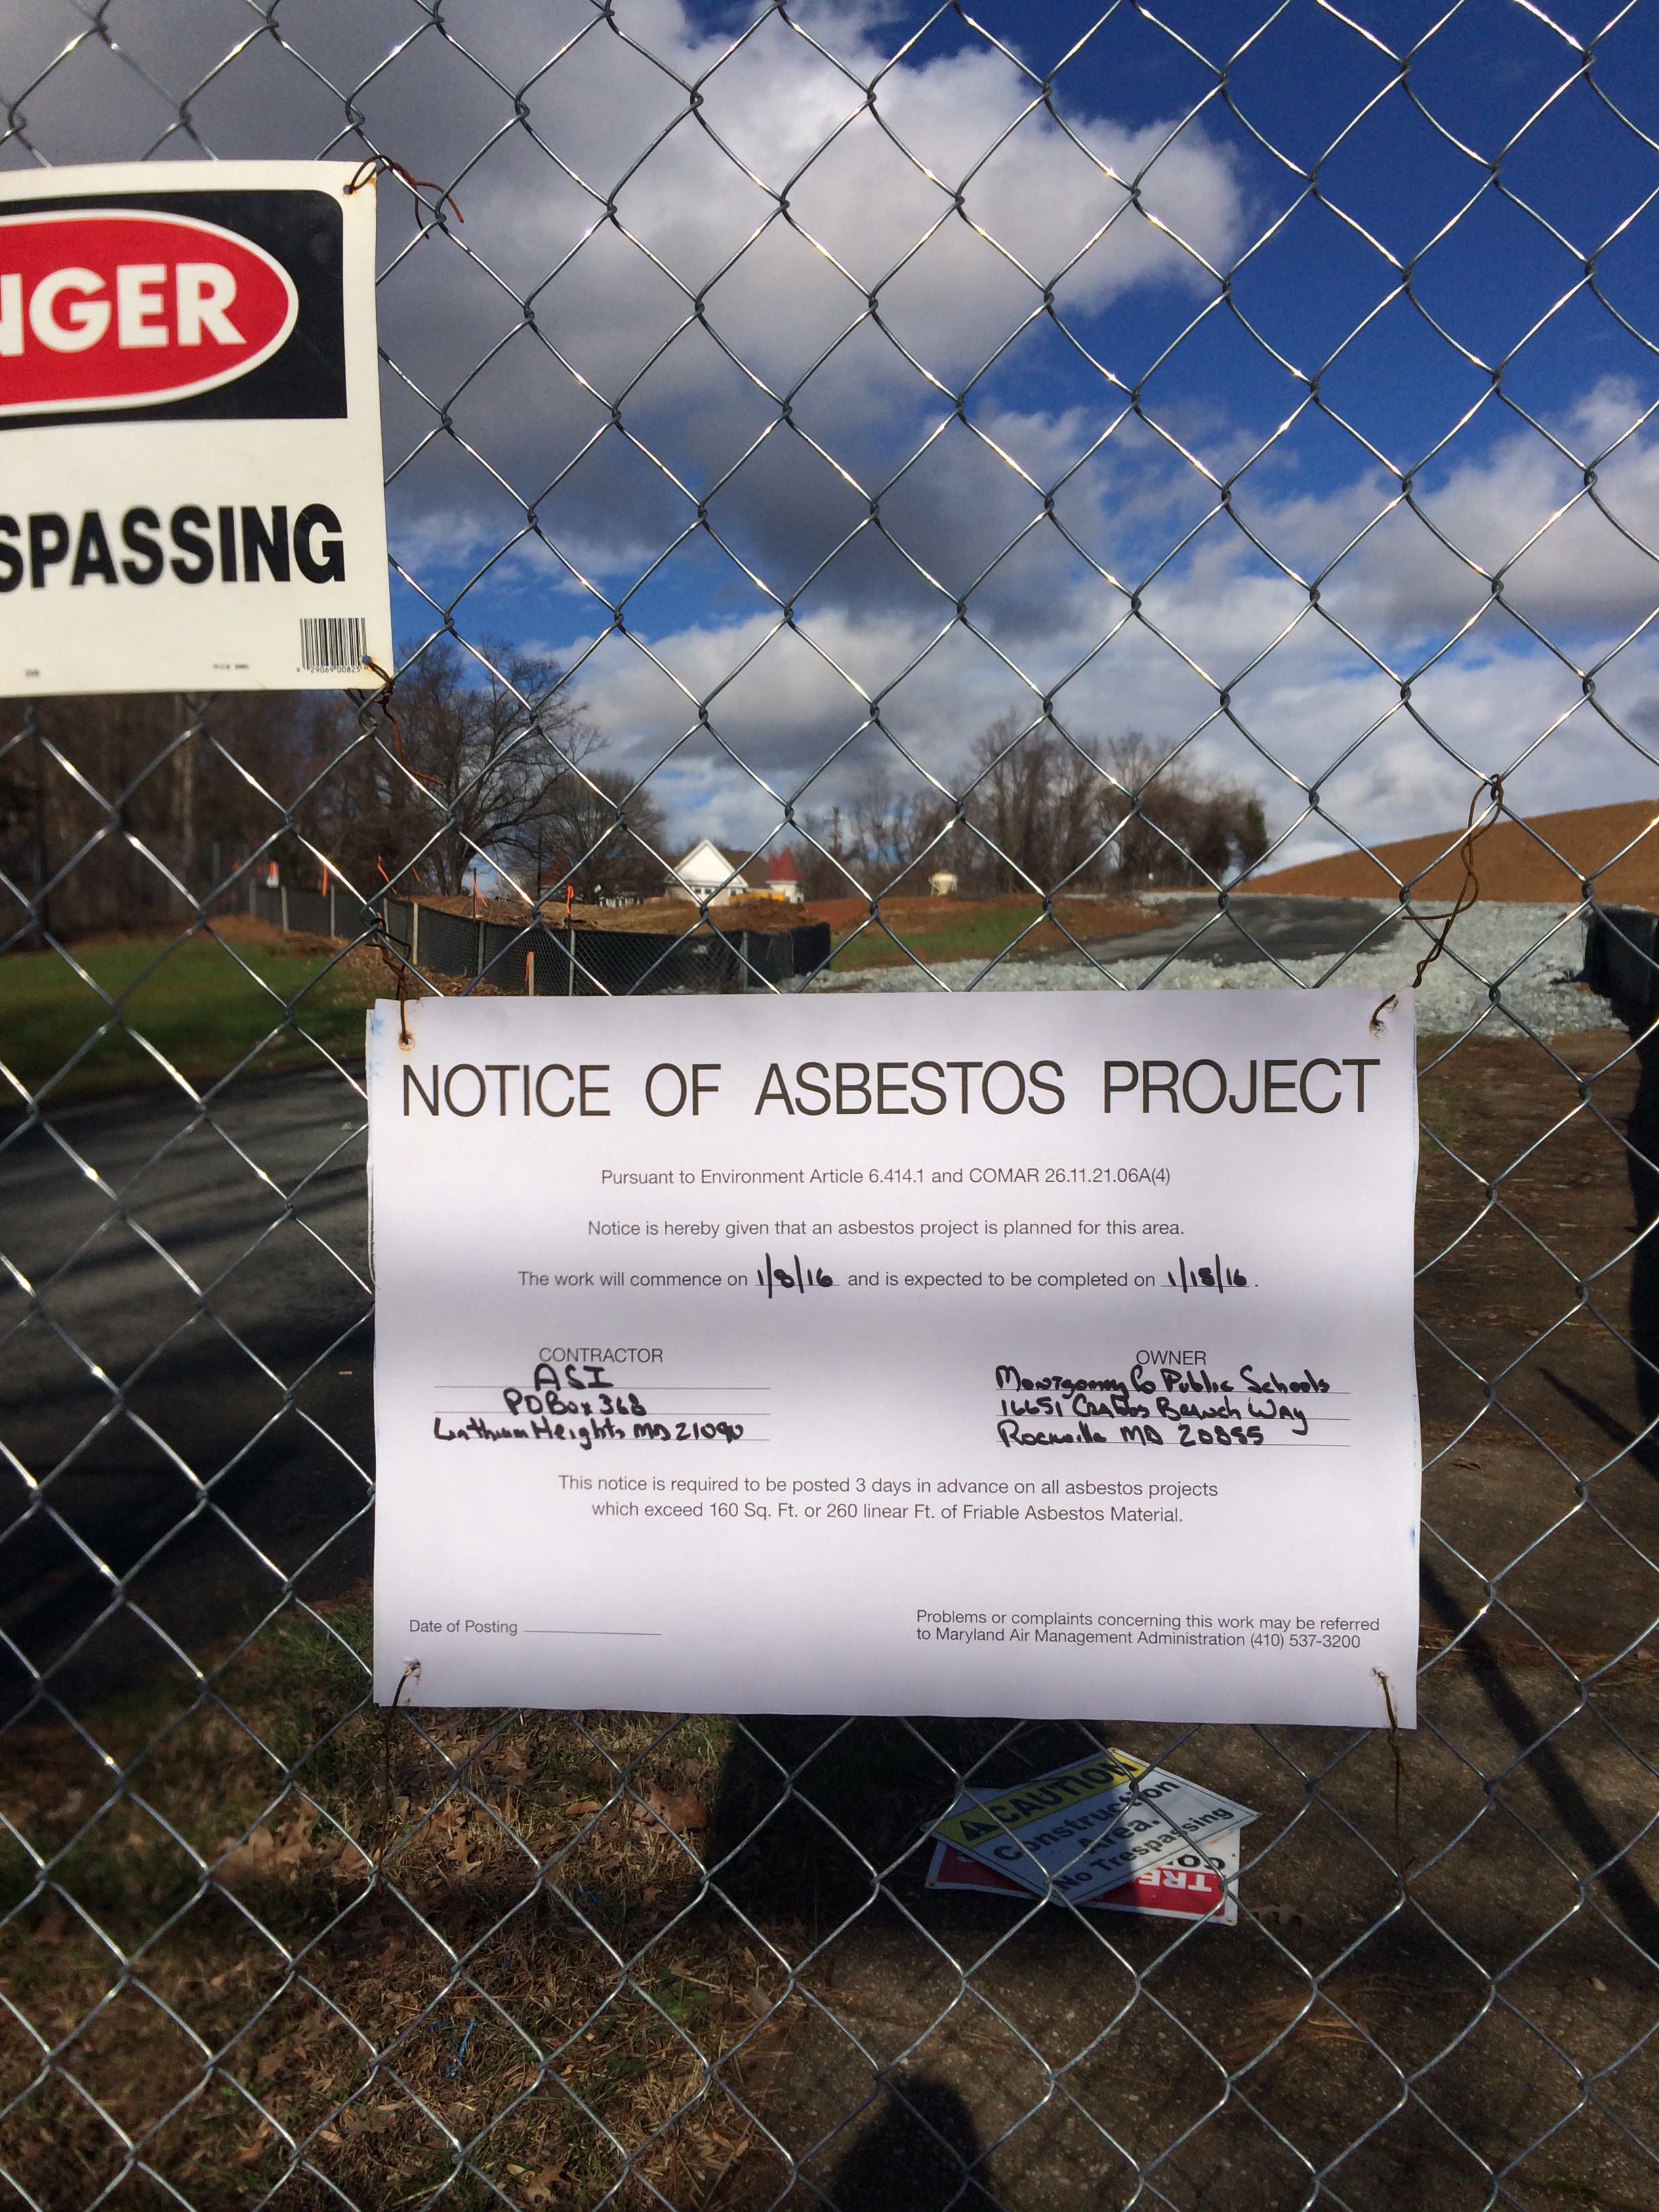 Asbestos in older school buildings still poses health hazard